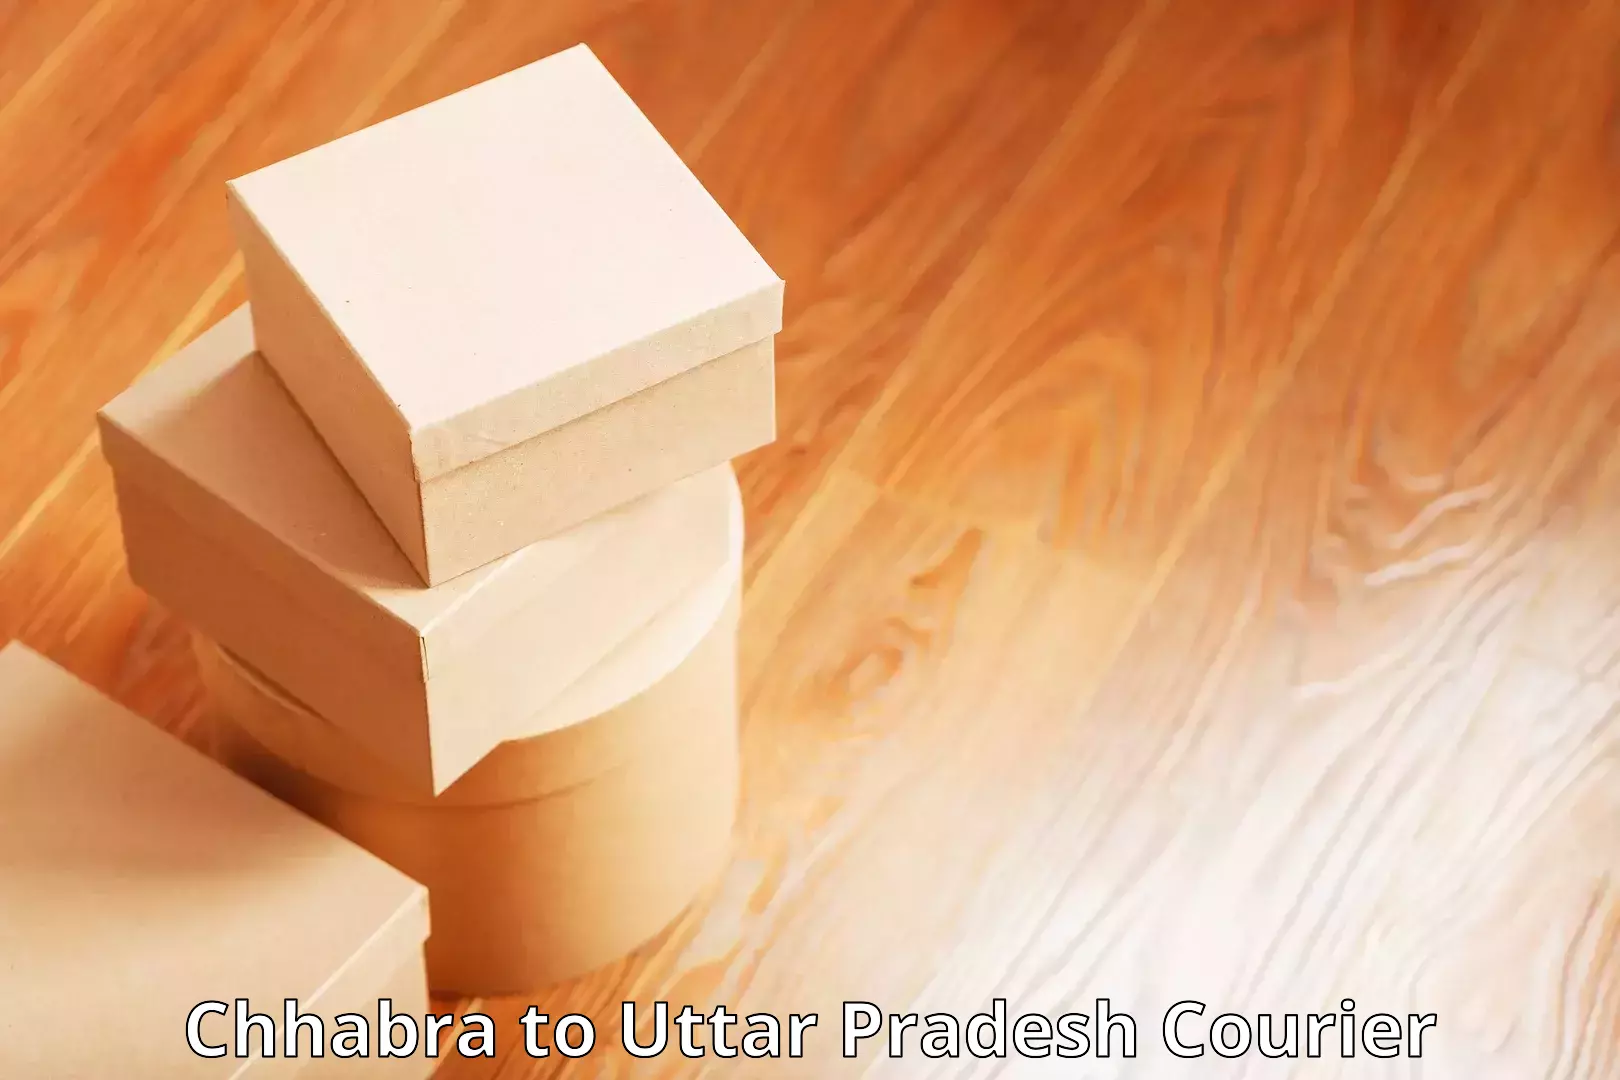 Package delivery network Chhabra to Varanasi